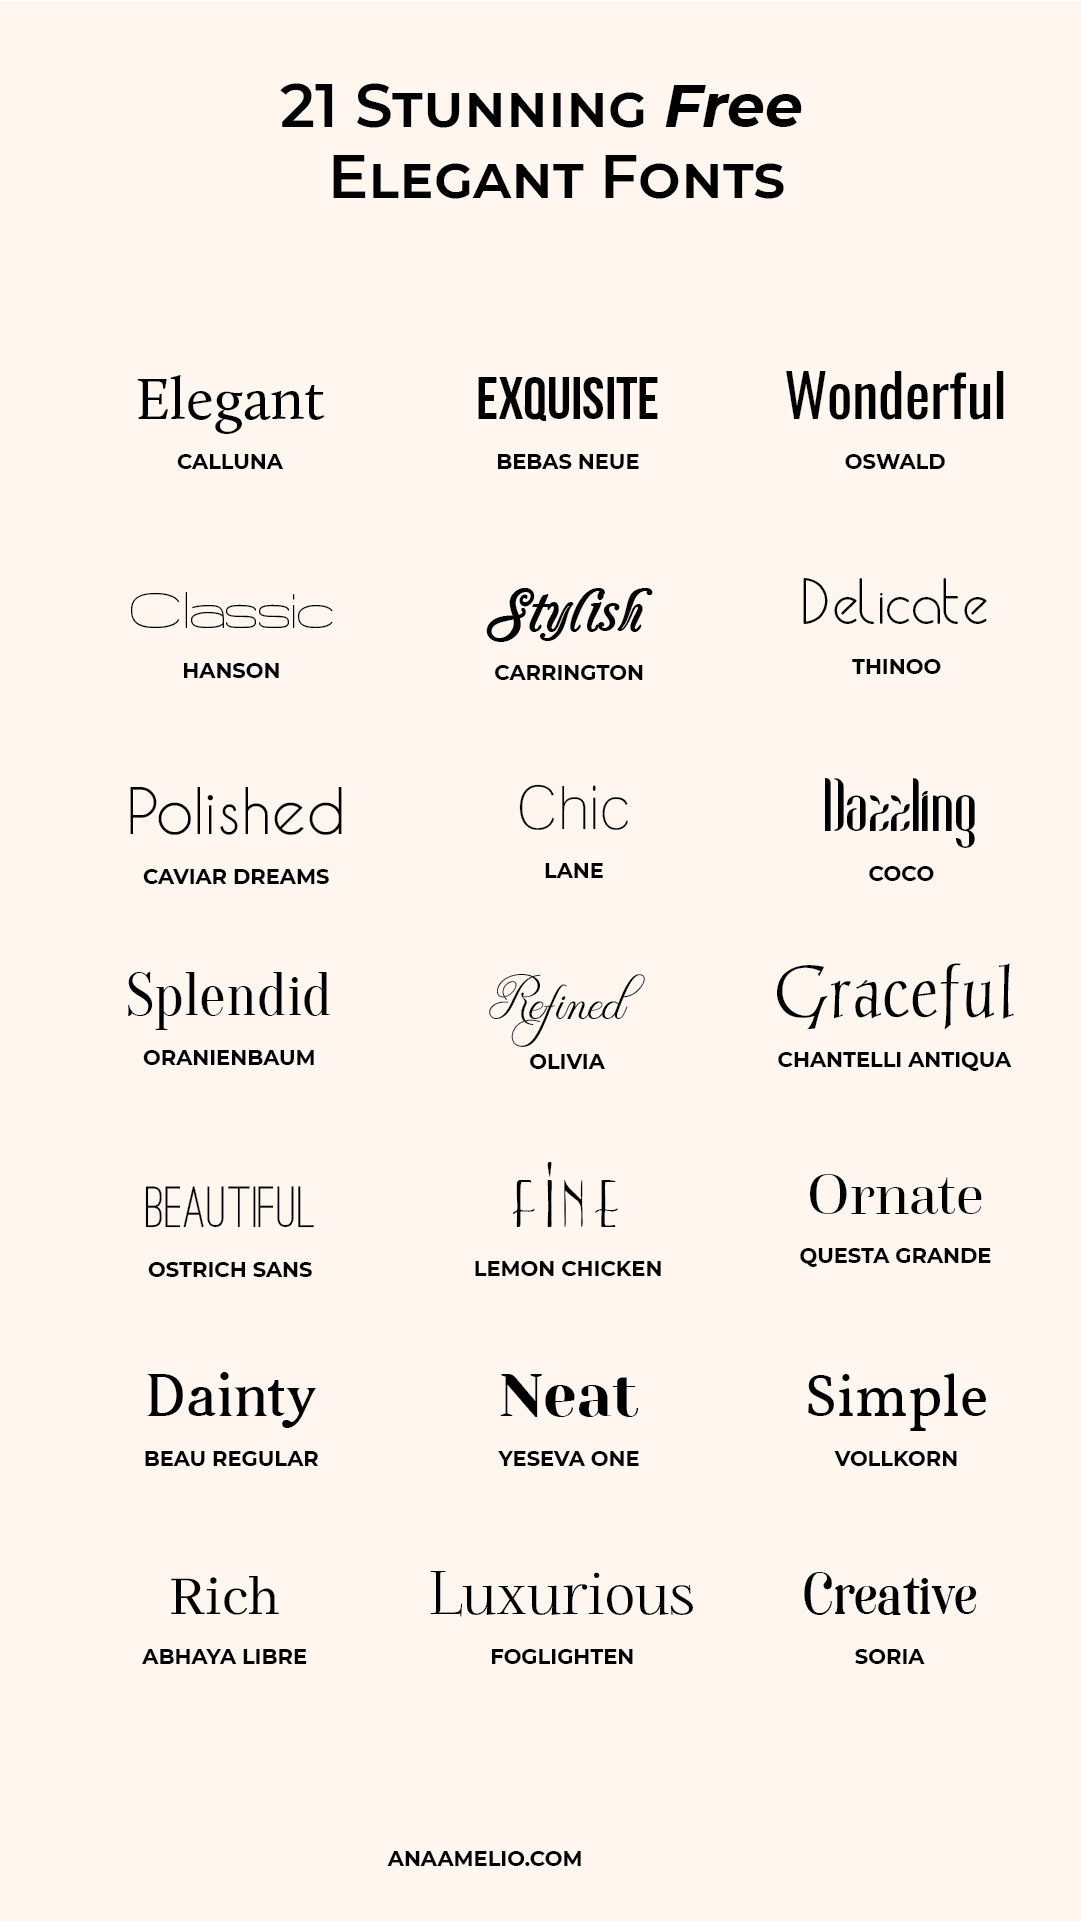 What font is elegant?